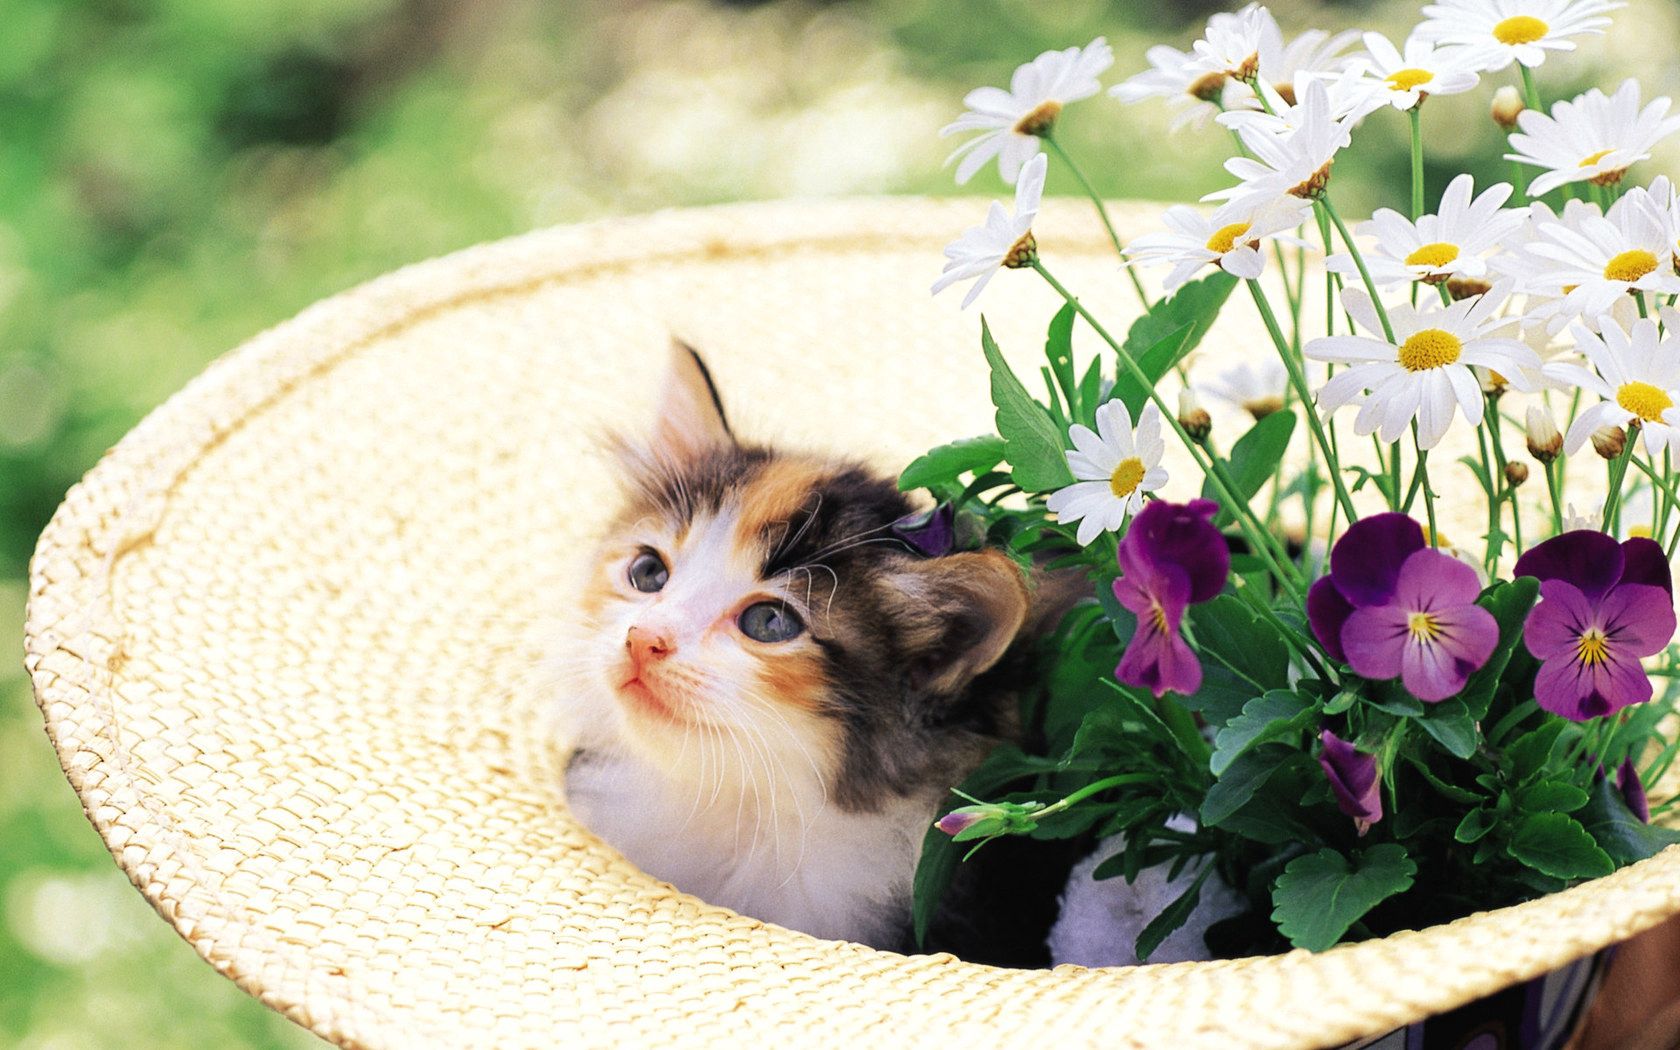 kitty, animals, grass, kitten, muzzle, hat cellphone